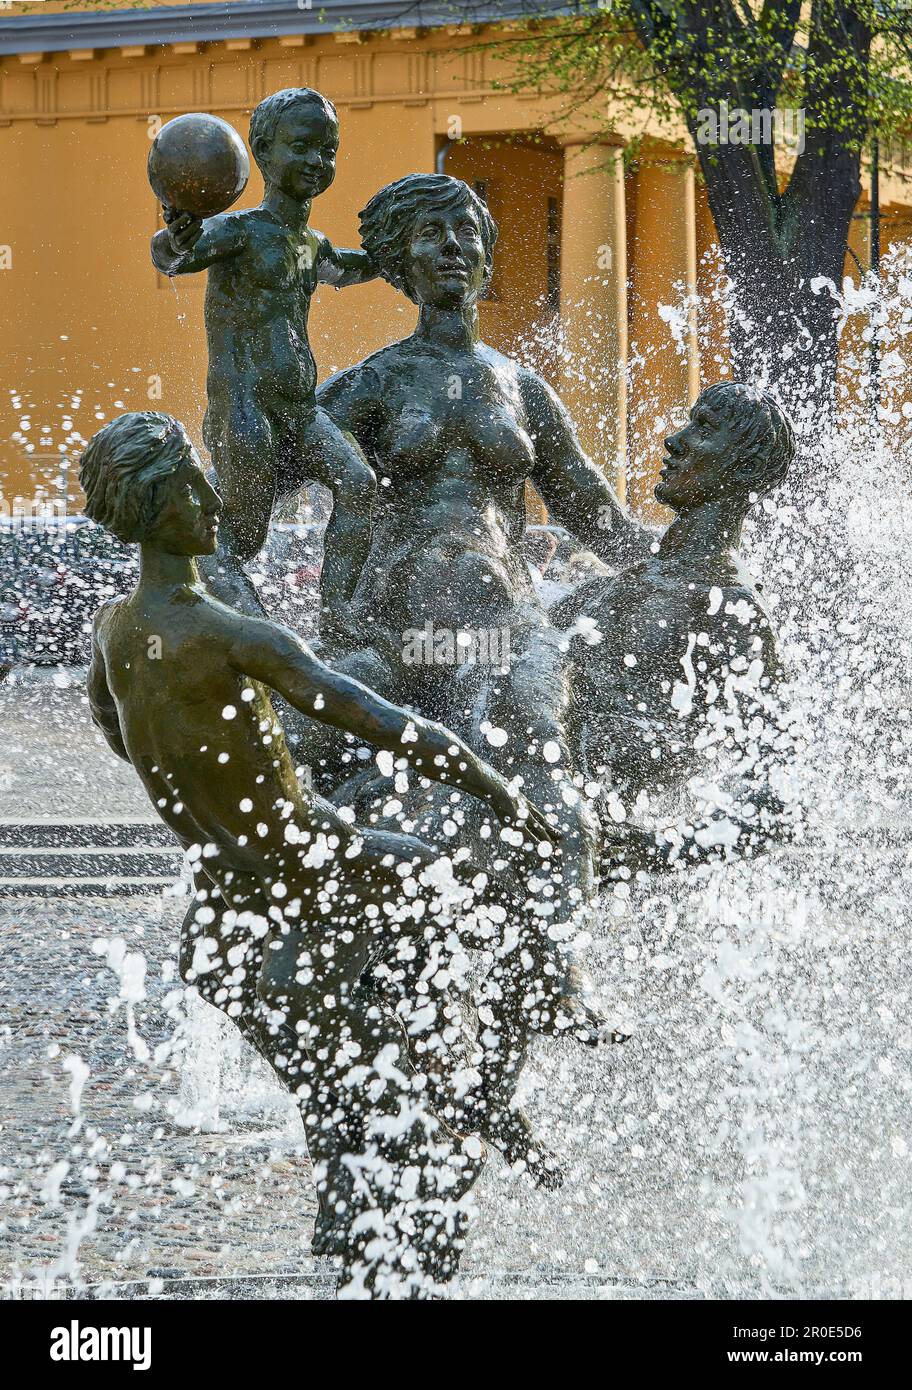 'Brunnen der Lebensfreude' (The fountain of joie de vivre) by Reinhard Dietrich, Jo Jastram 1980, Rostock, Germany Stock Photo